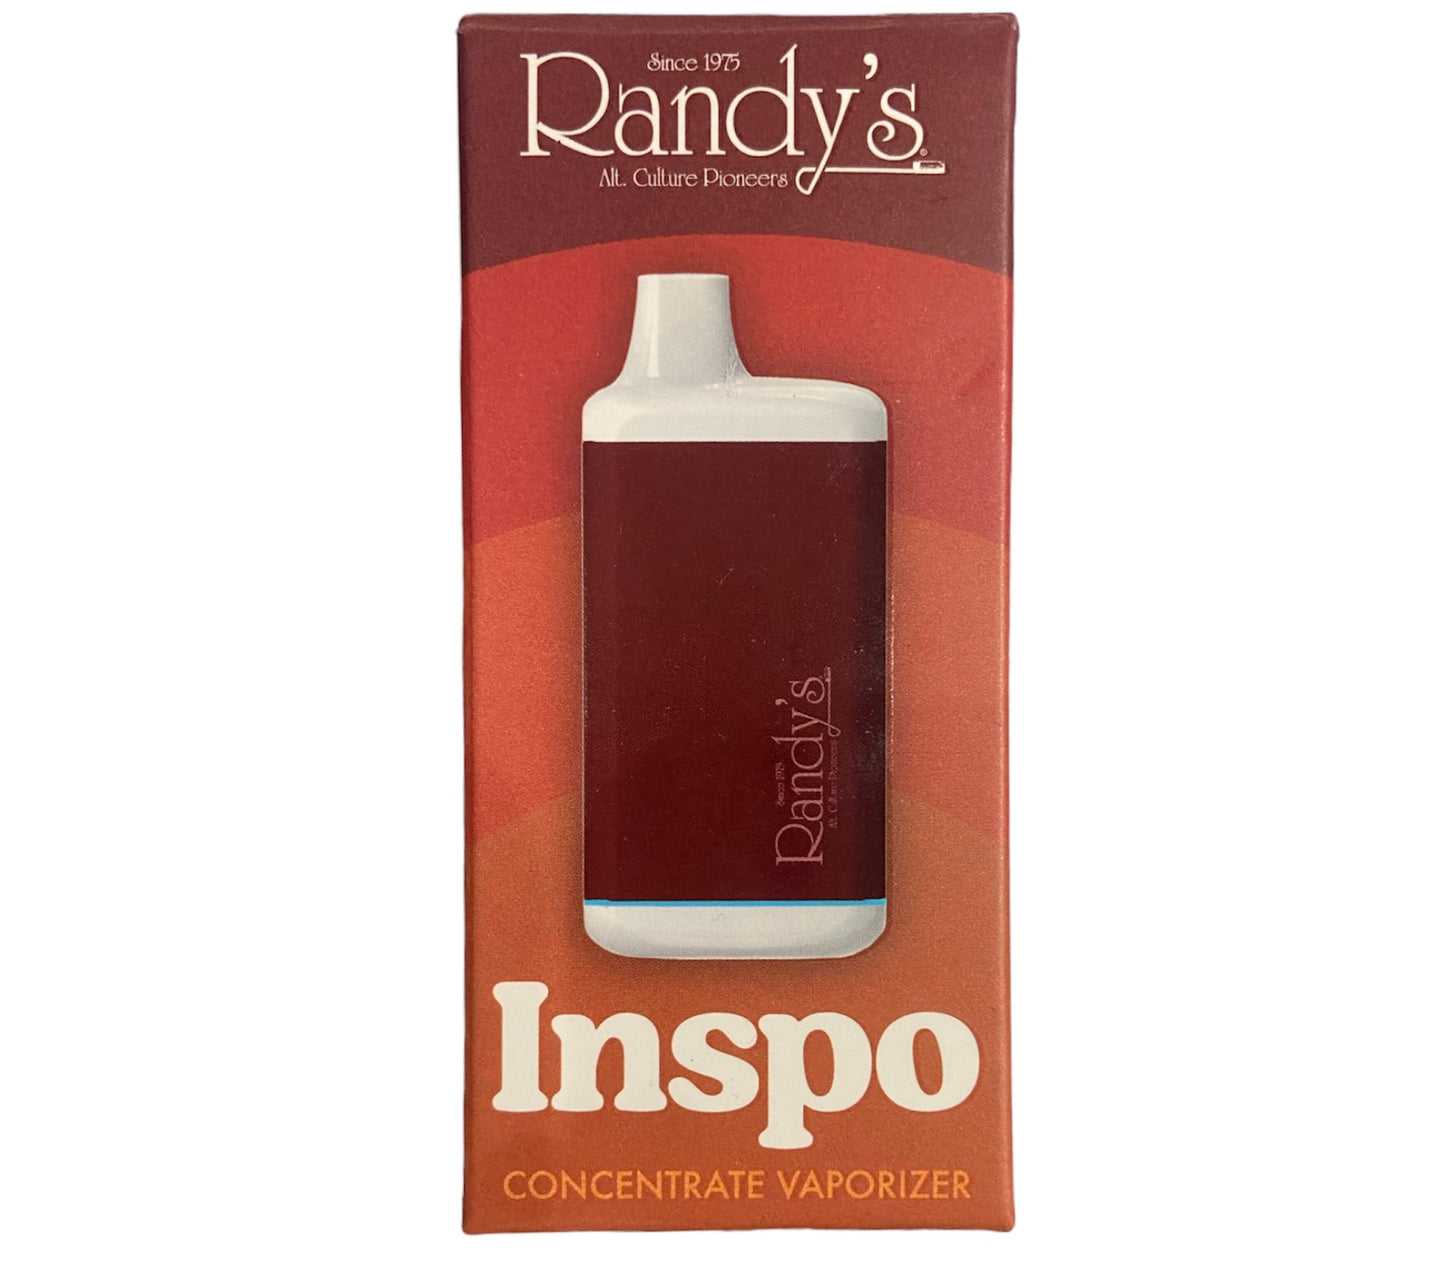 Randy's Inspo Concentrate Vaporizer